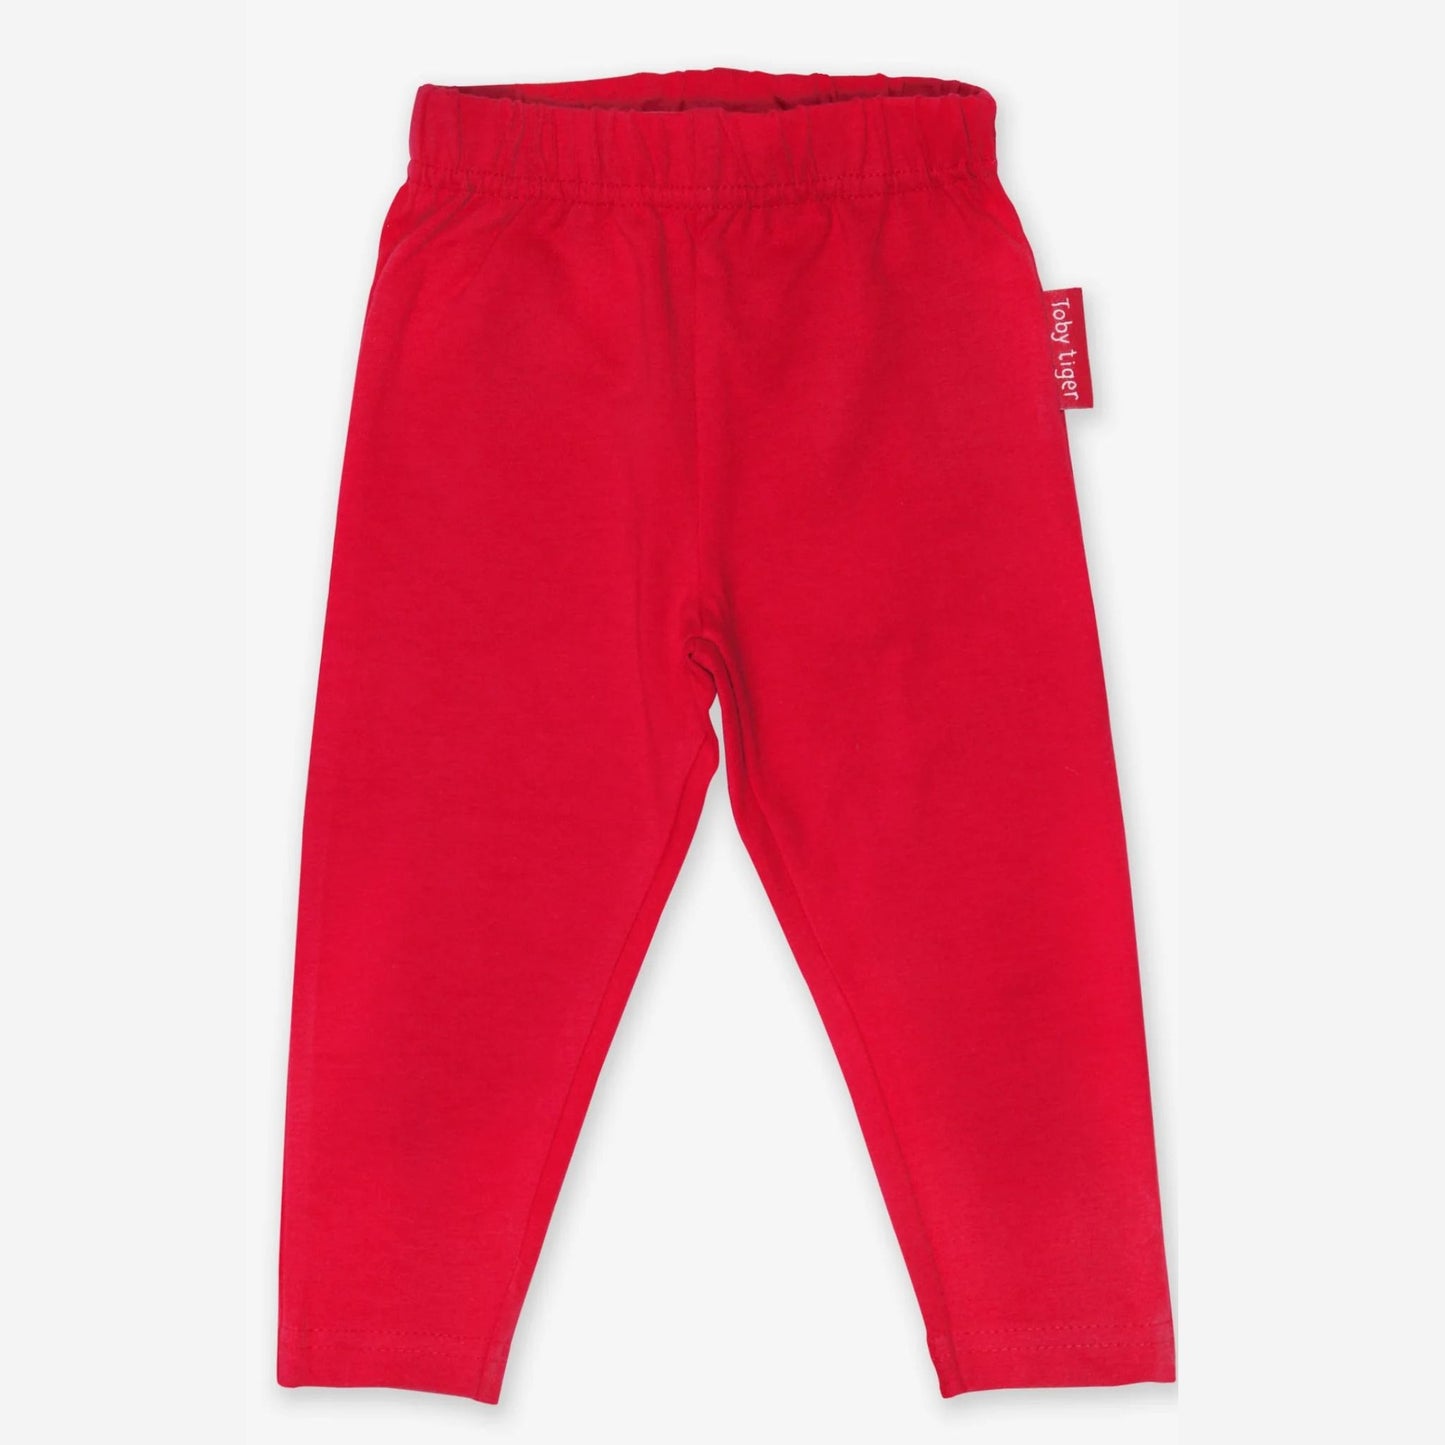 Toby Tiger leggings - red - sale